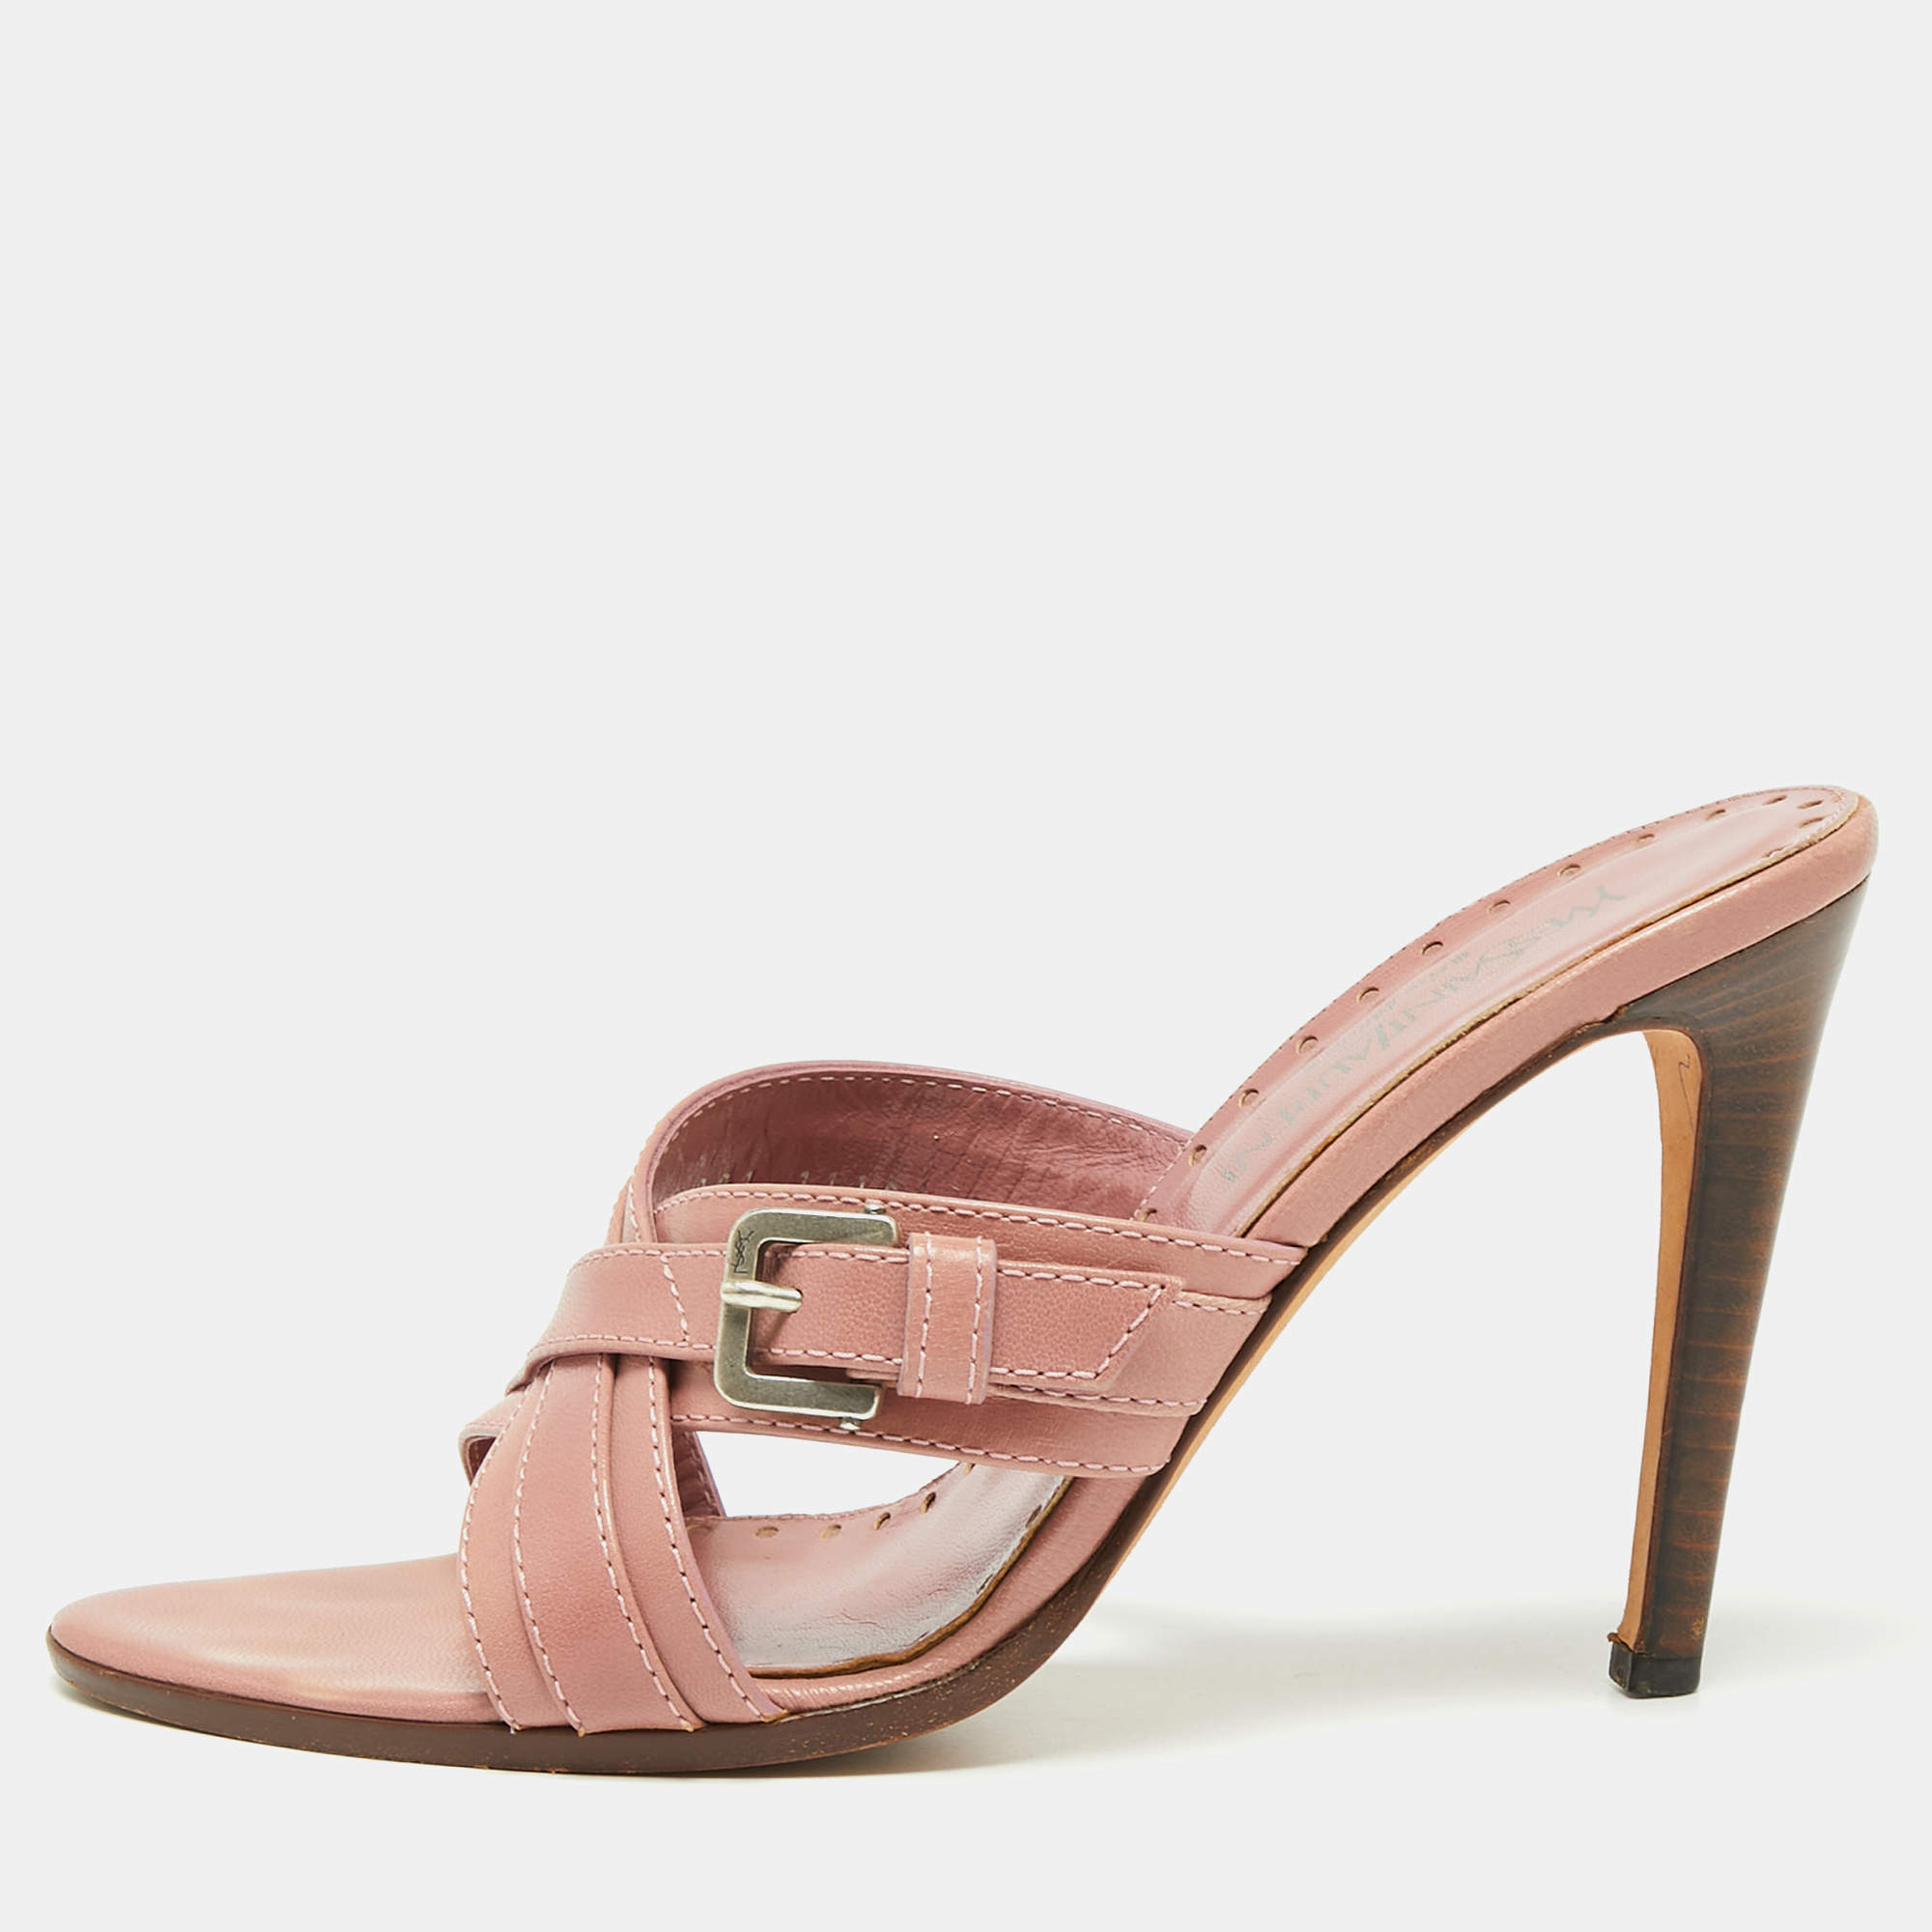 Yves Saint Laurent Pink Leather Cross Strap Buckle Sandals Size 39